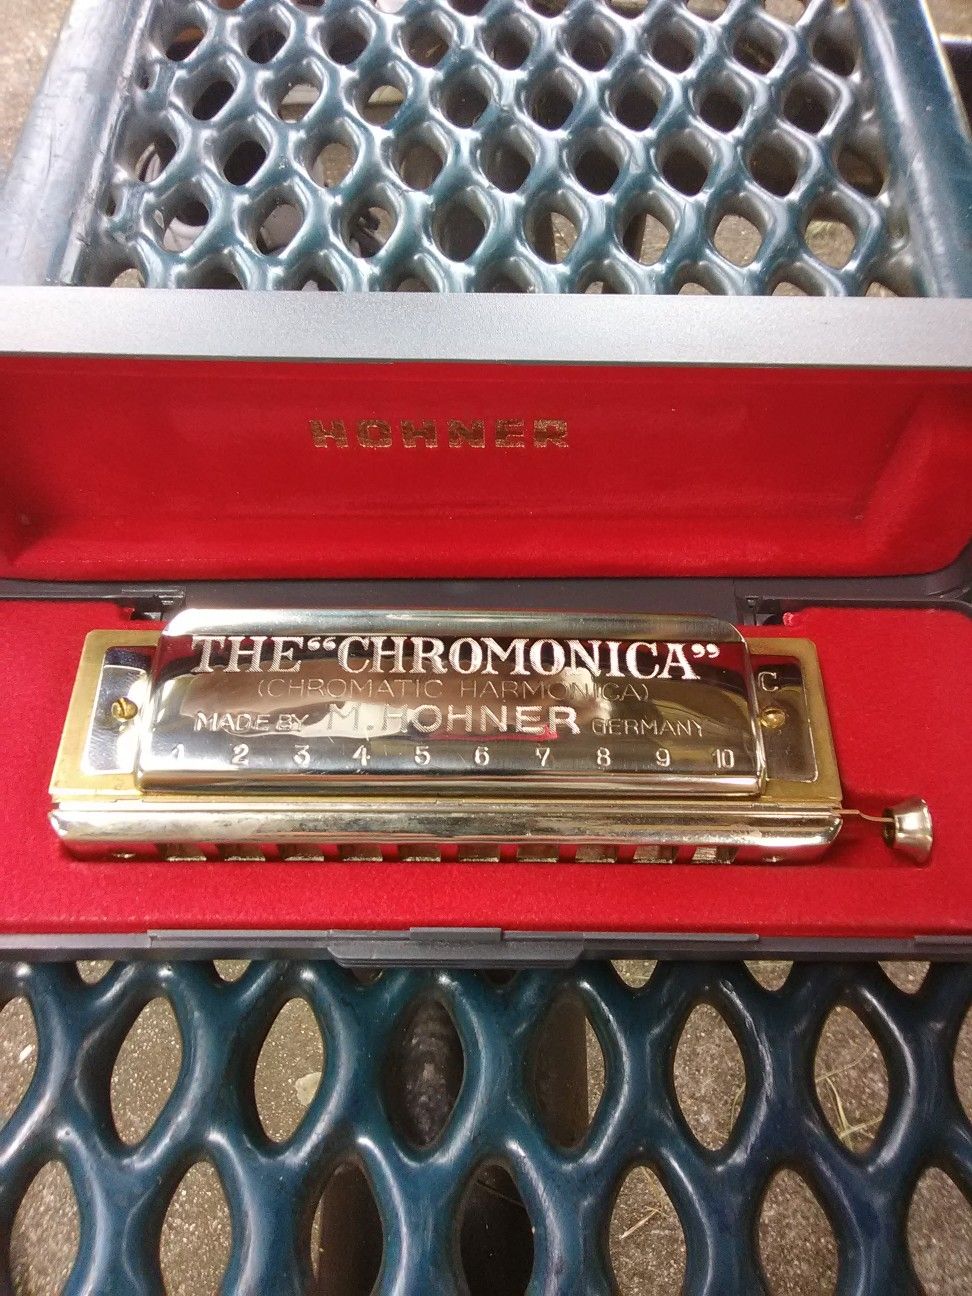 The''CHROMONICA harmonica